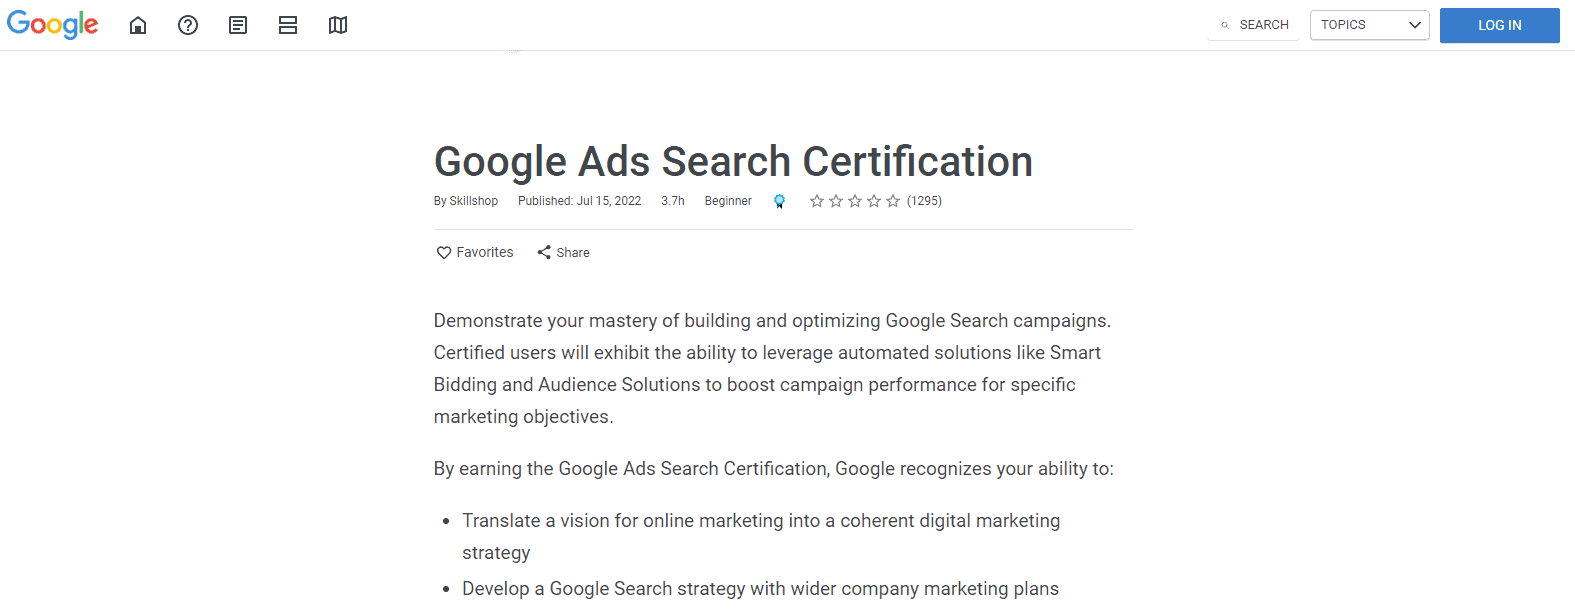 How to earn the Google Skillshop certifications?